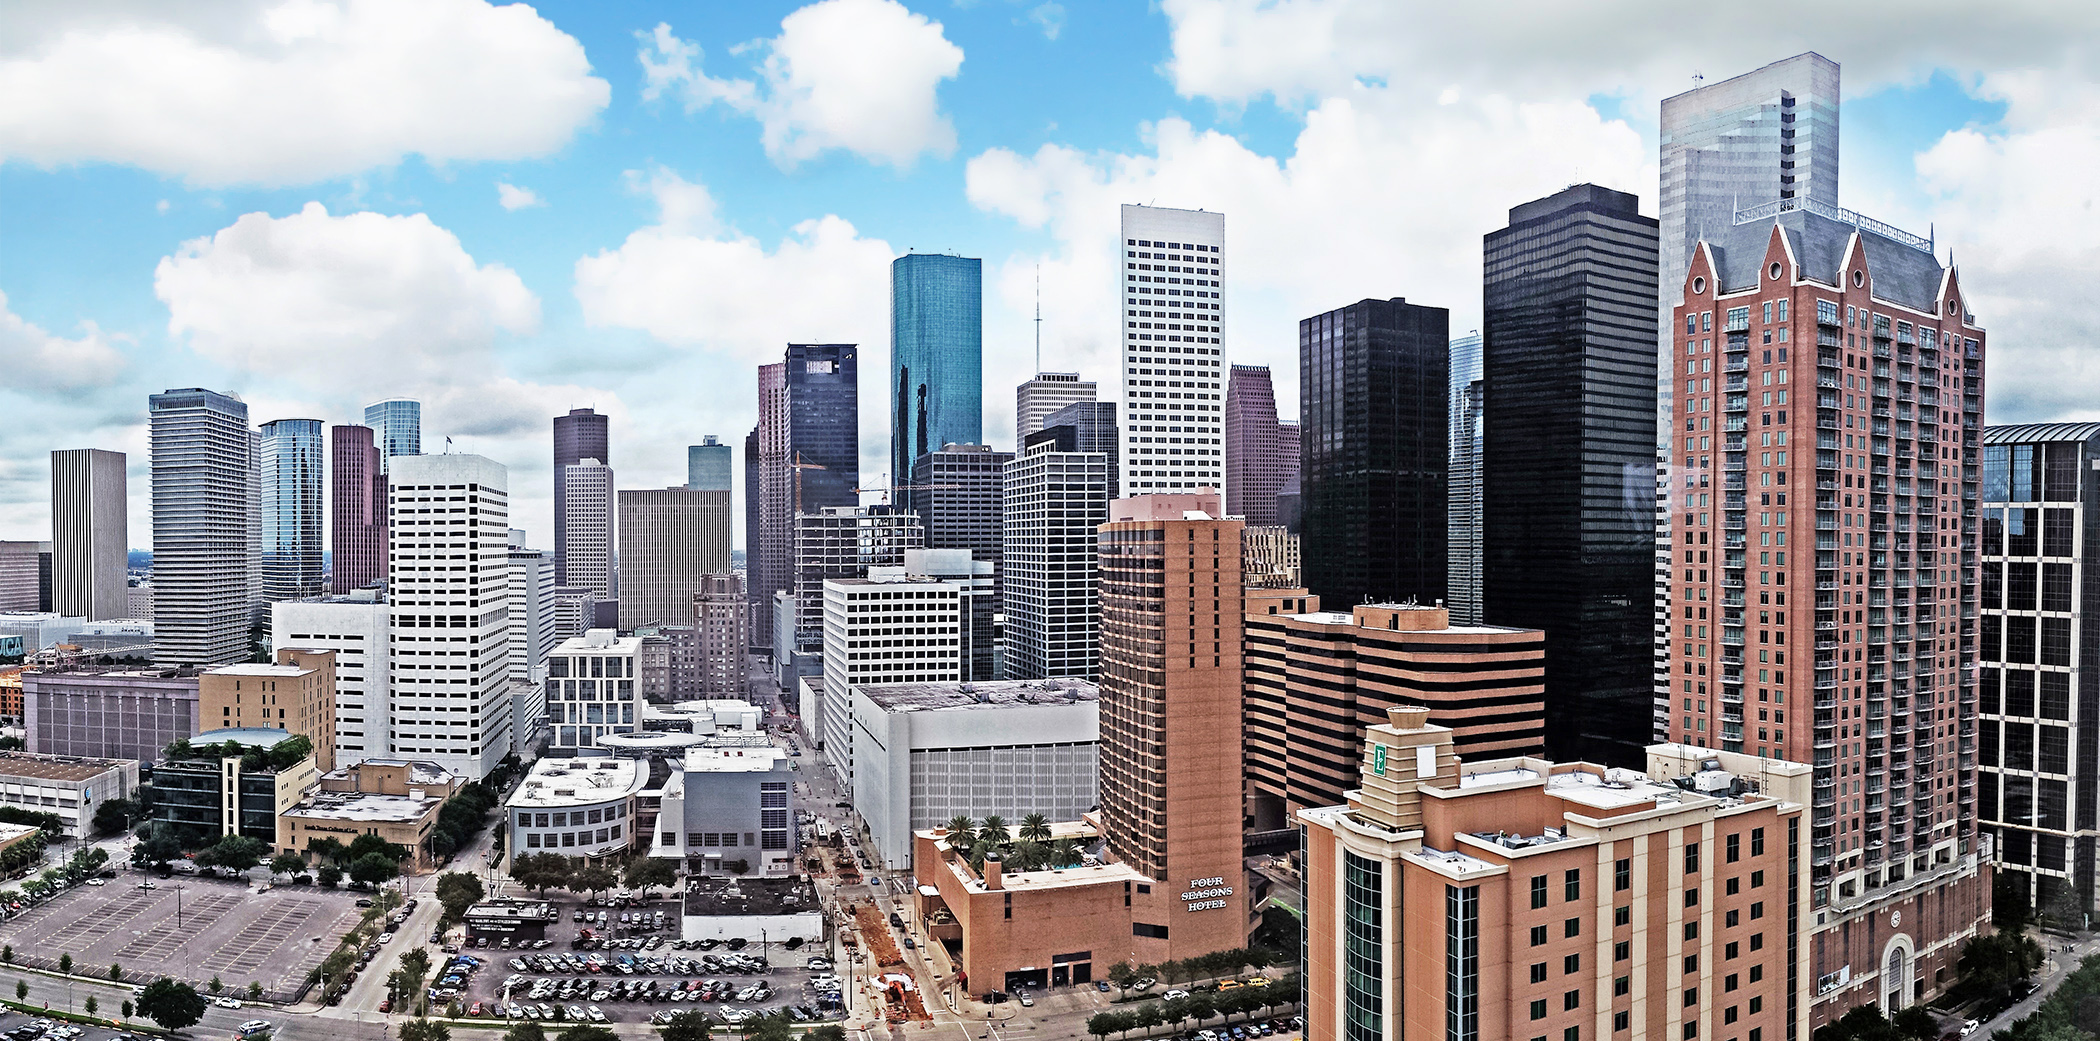 Architecture of Houston - Wikipedia